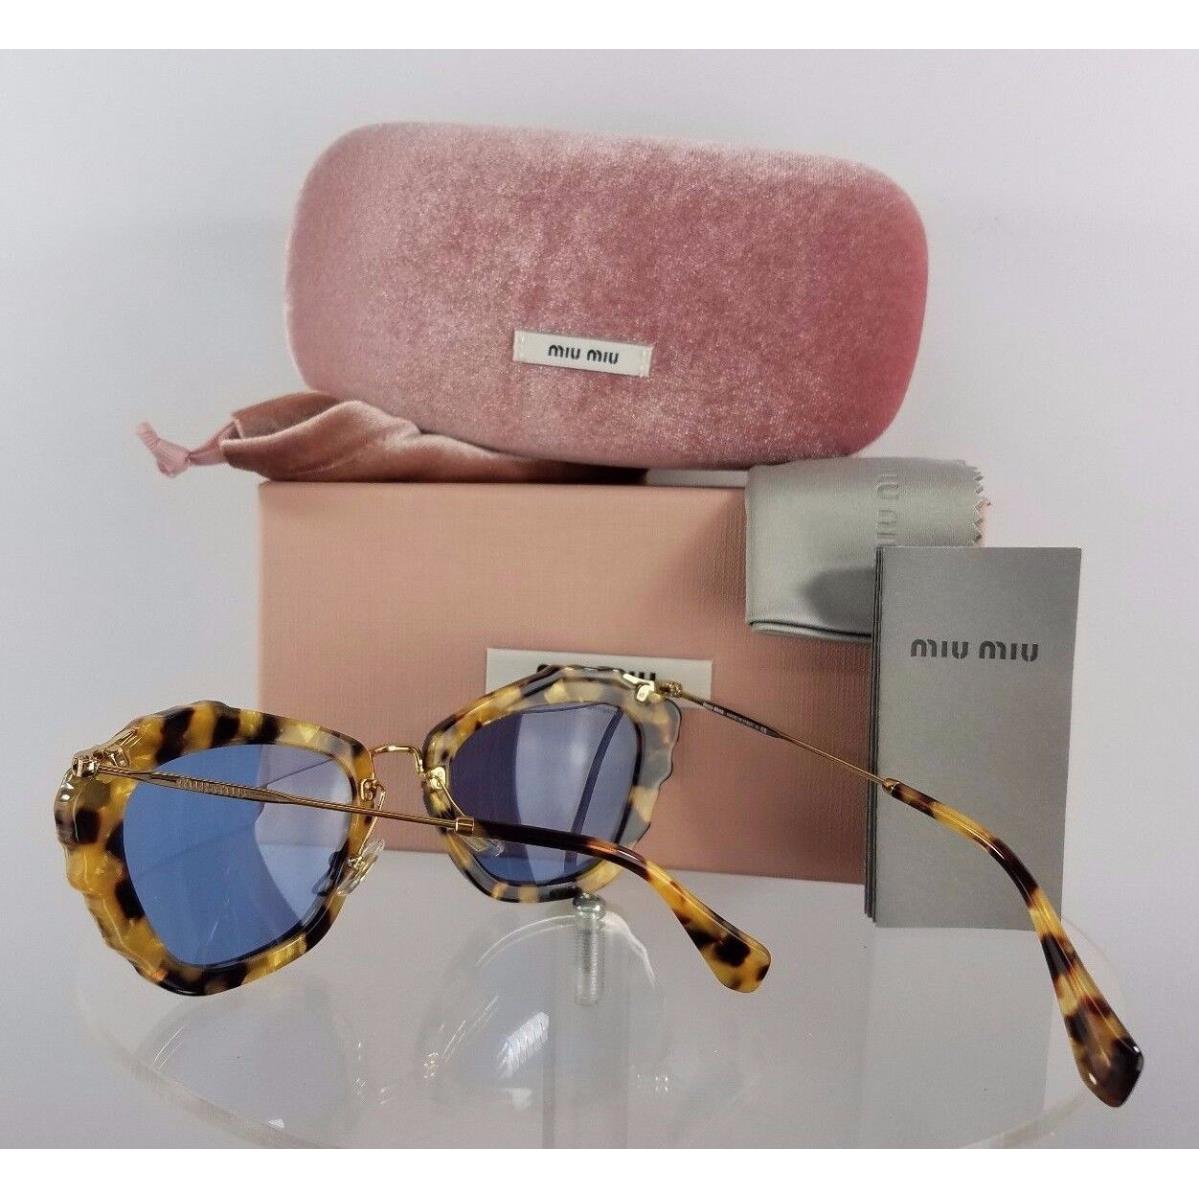 Miu Miu sunglasses  - Tortoise Frame, Blue Lens